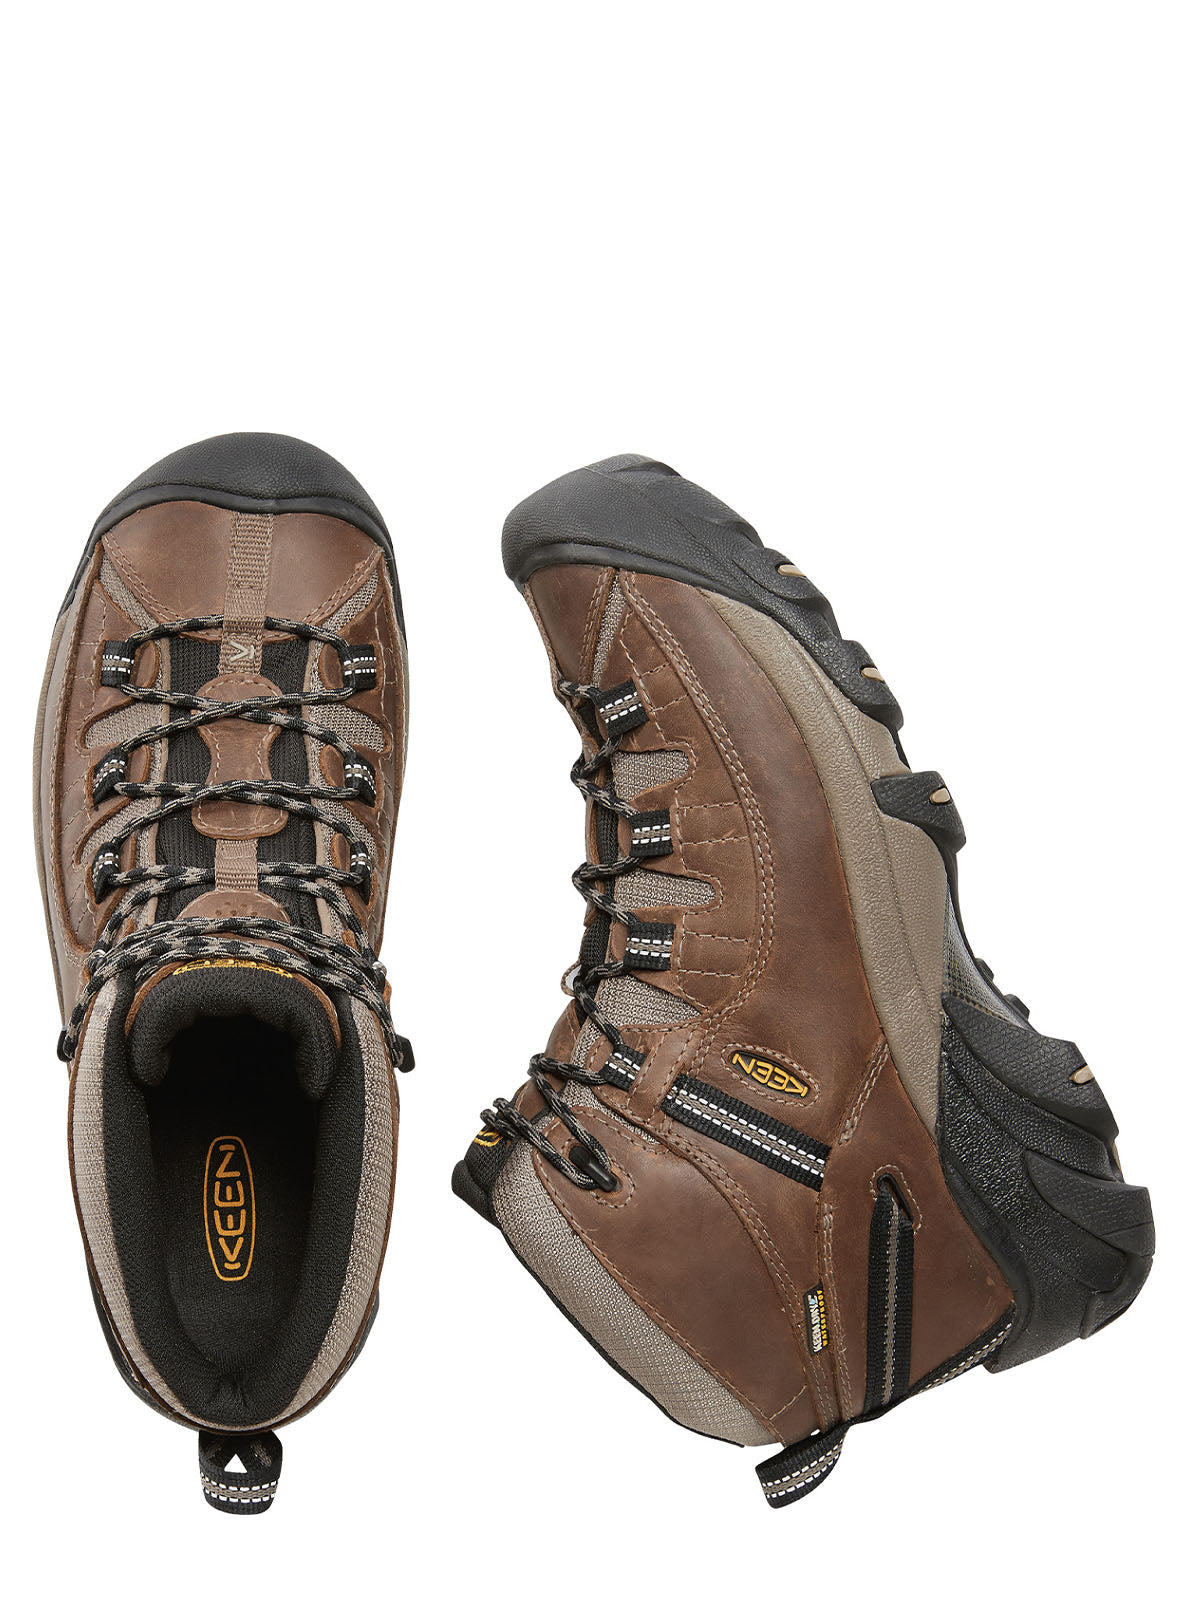 Targhee II Mid Waterproof Hiking Boots for Men